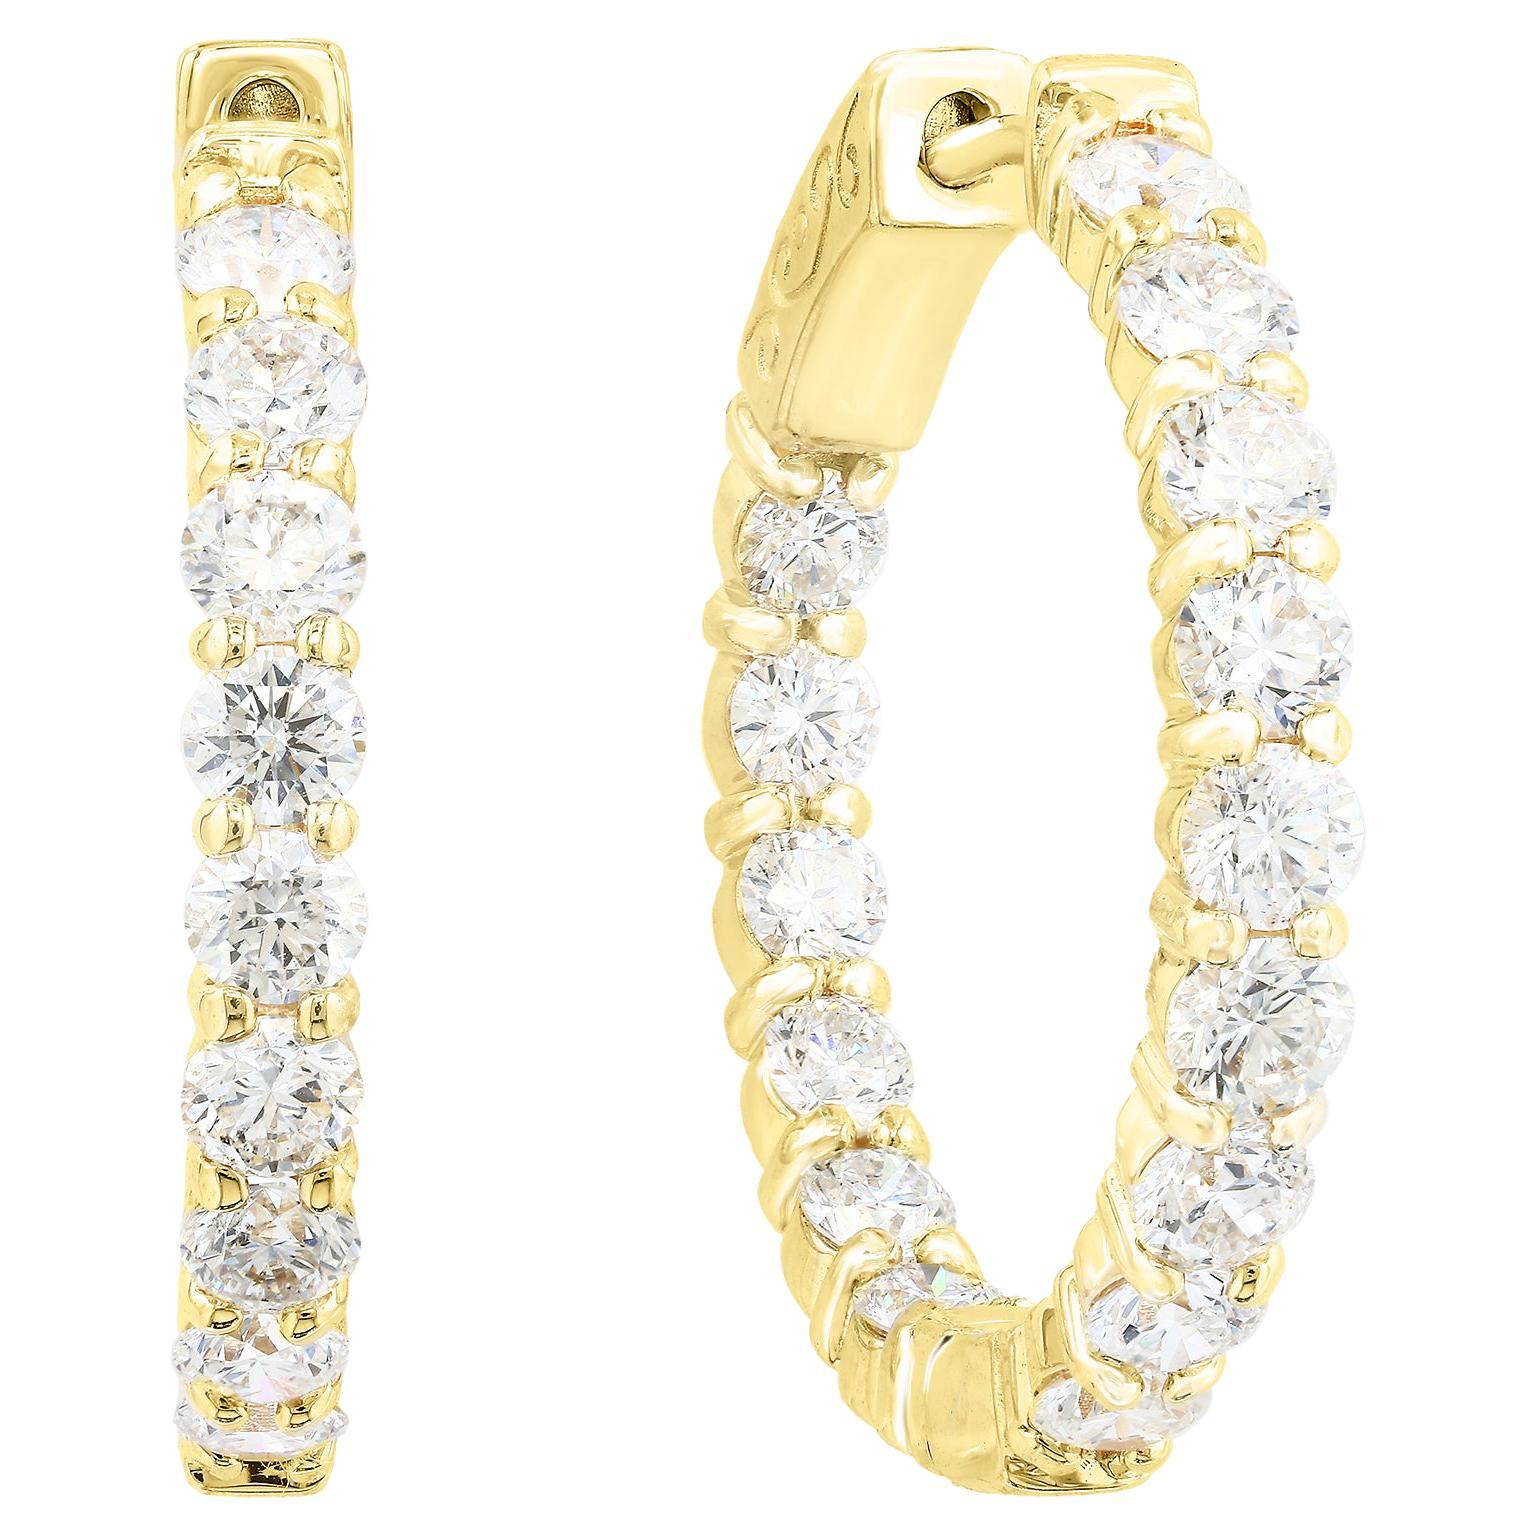 3.15 Carat Round Cut Diamond Hoop Earrings in 14K Yellow Gold